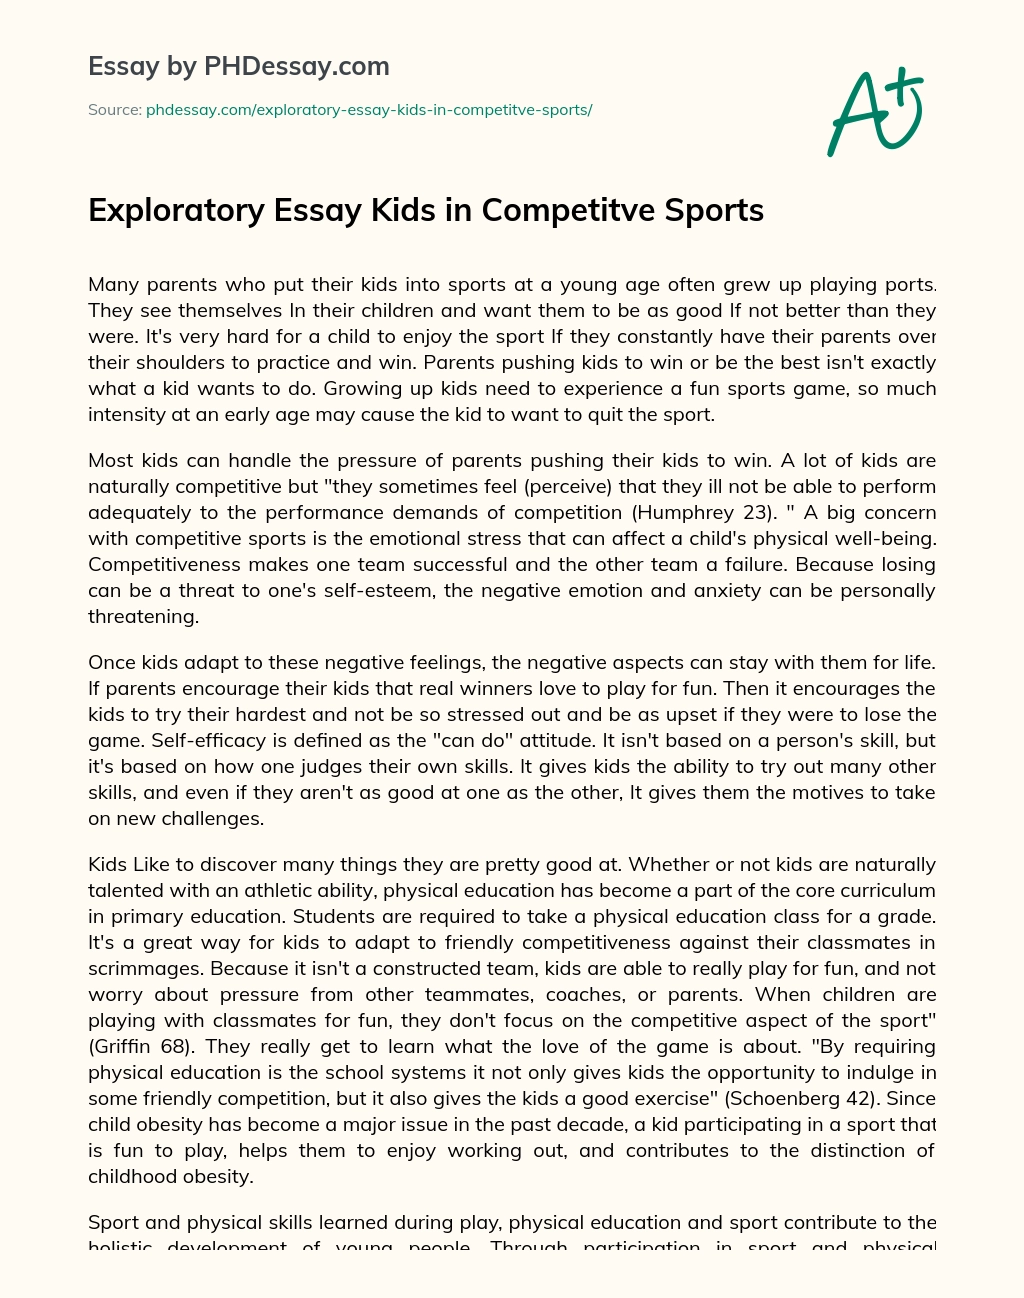 Exploratory Essay Kids in Competitve Sports